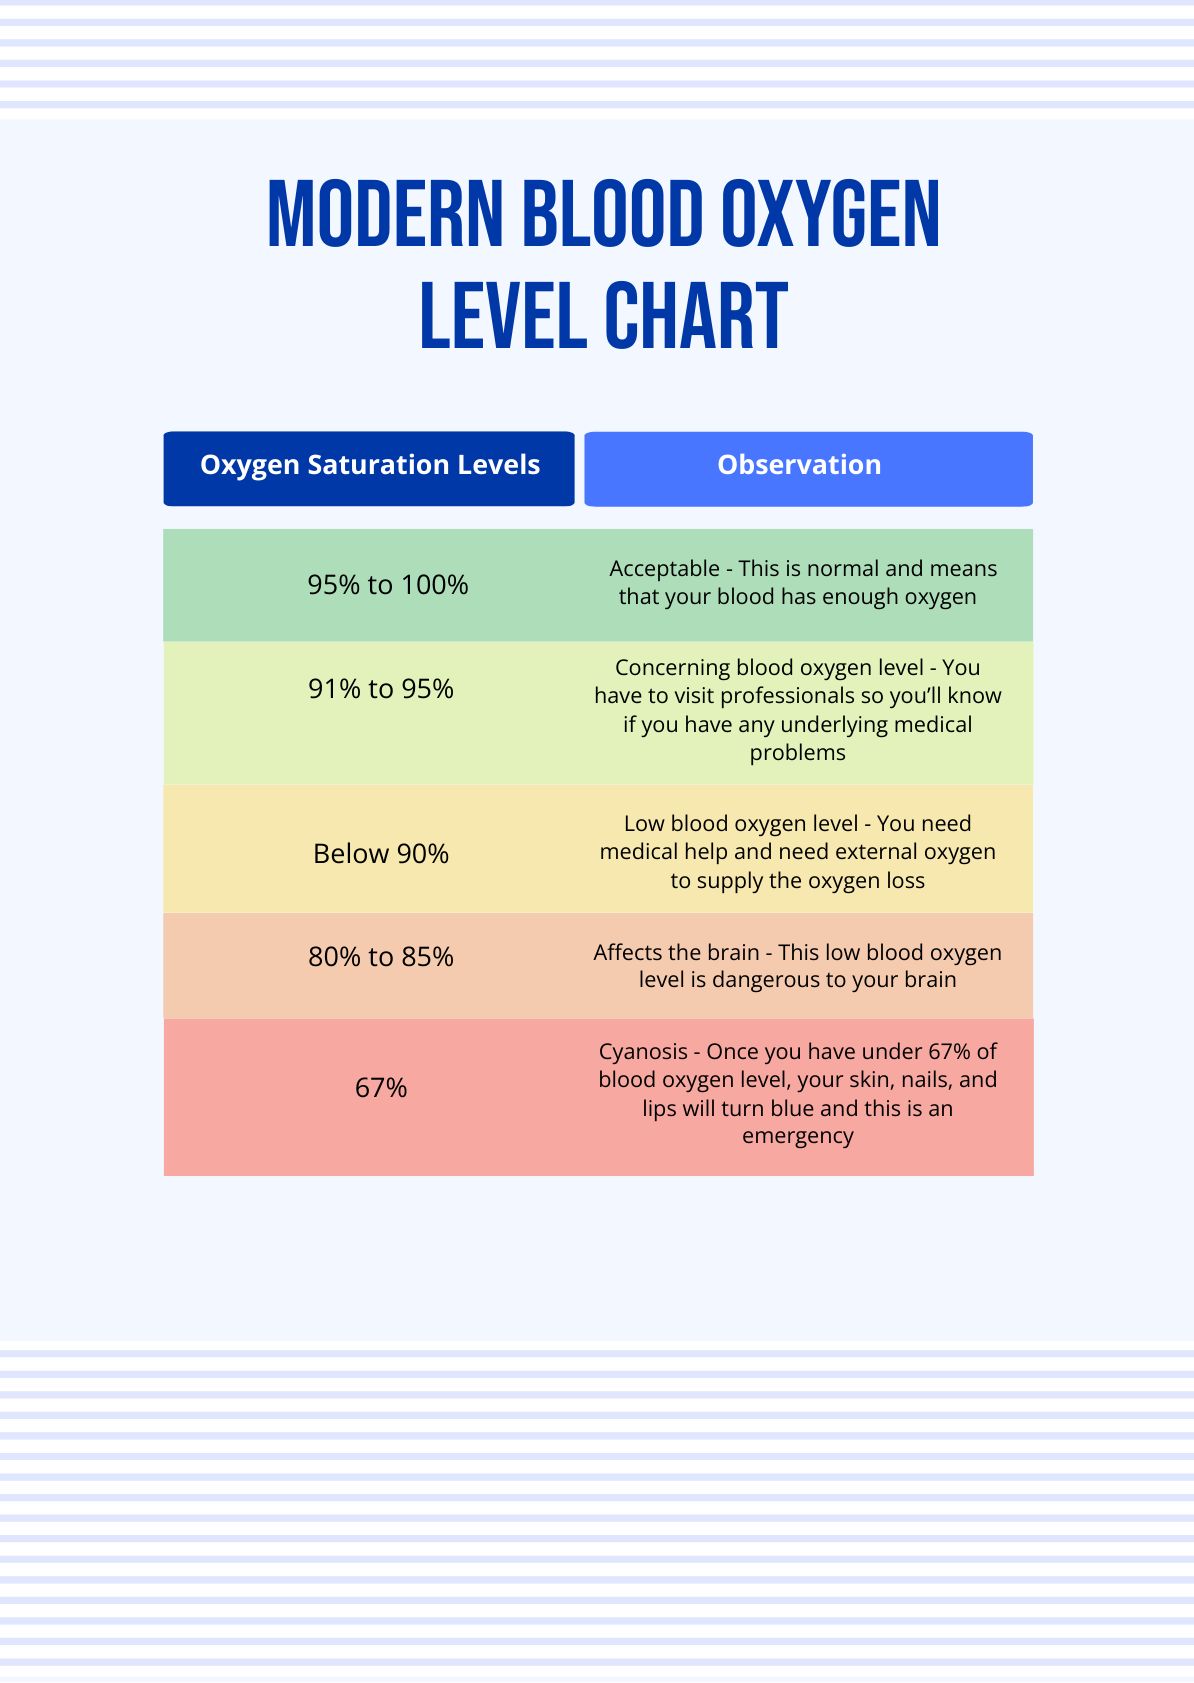 Free Good Blood Oxygen Level Chart - Download in PDF, Illustrator